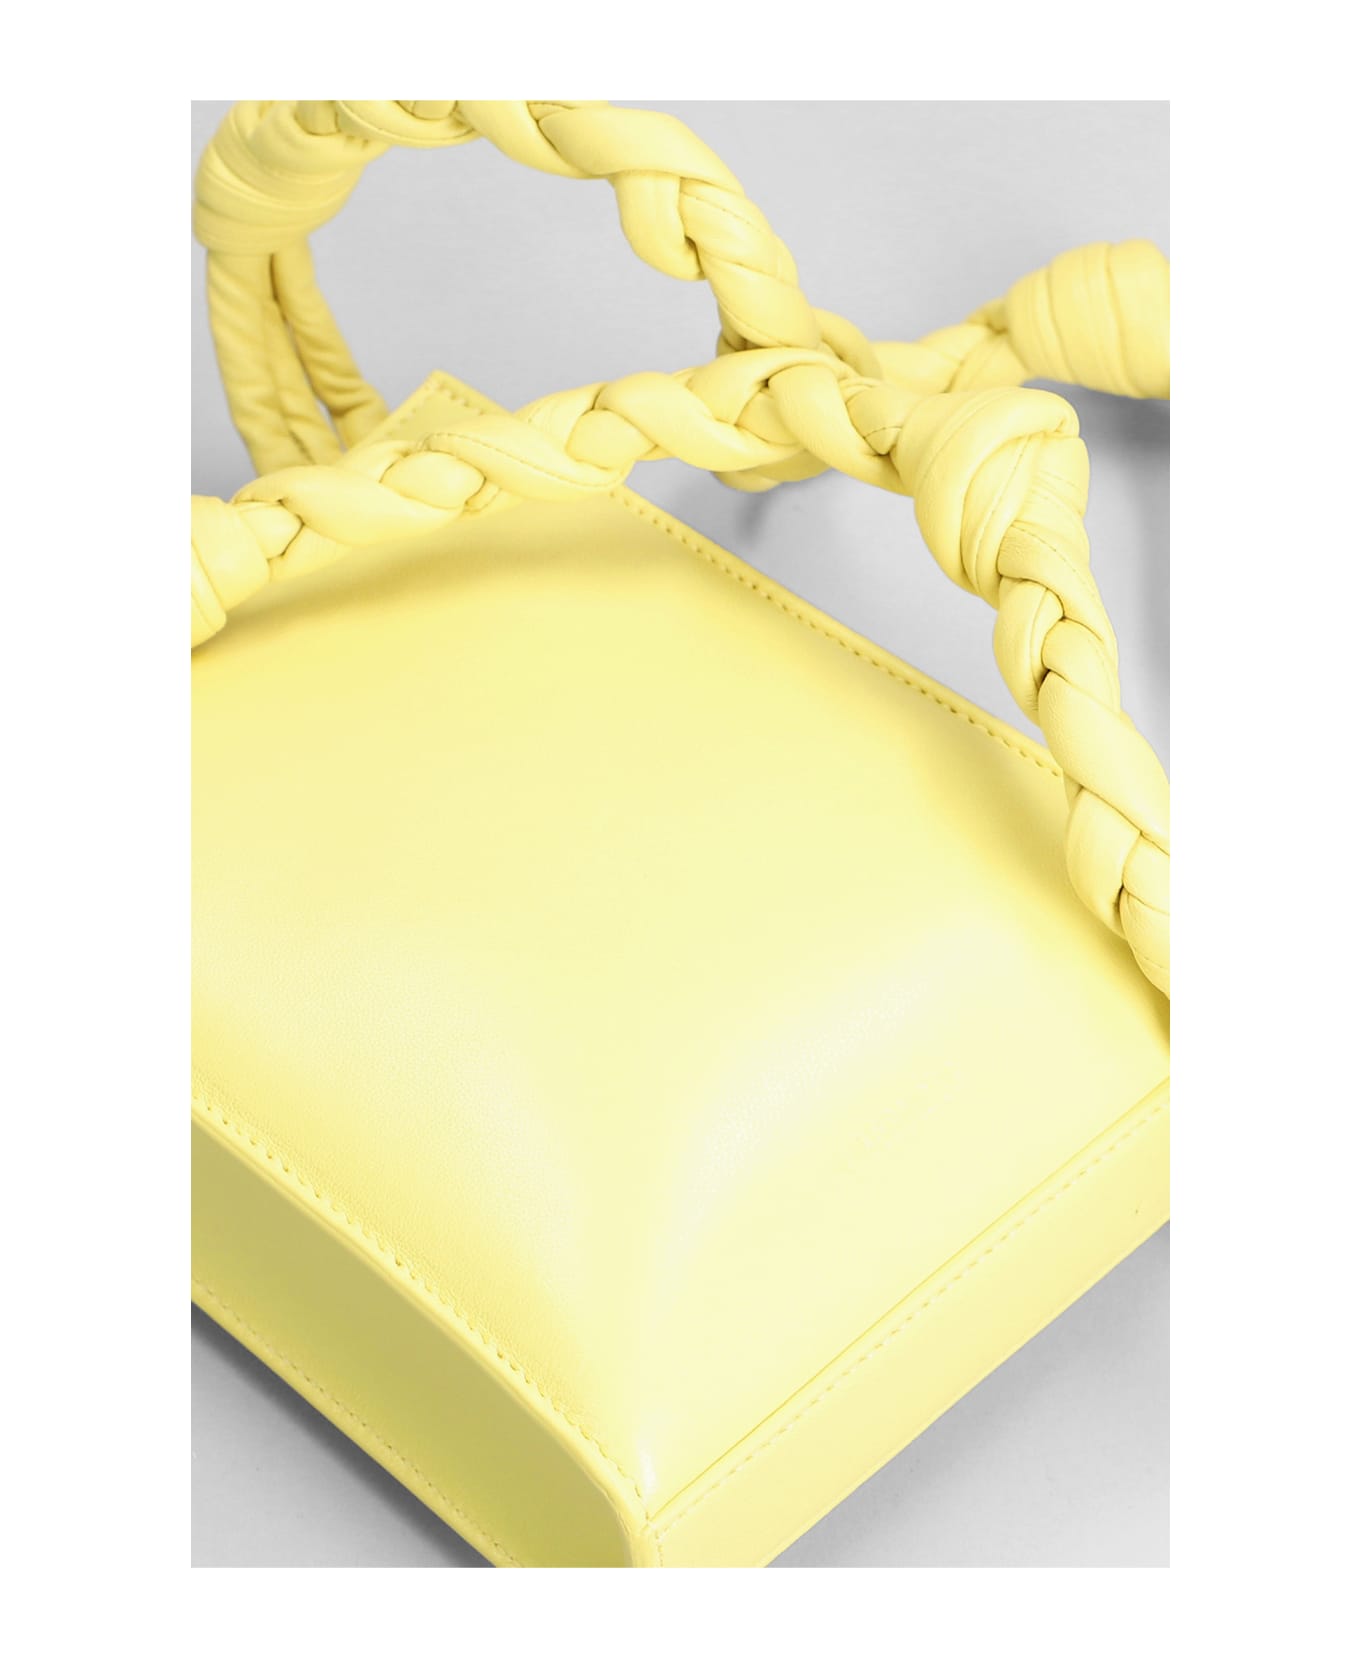 Jil Sander Tangle Sm Shoulder Bag In Yellow Leather - yellow ショルダーバッグ